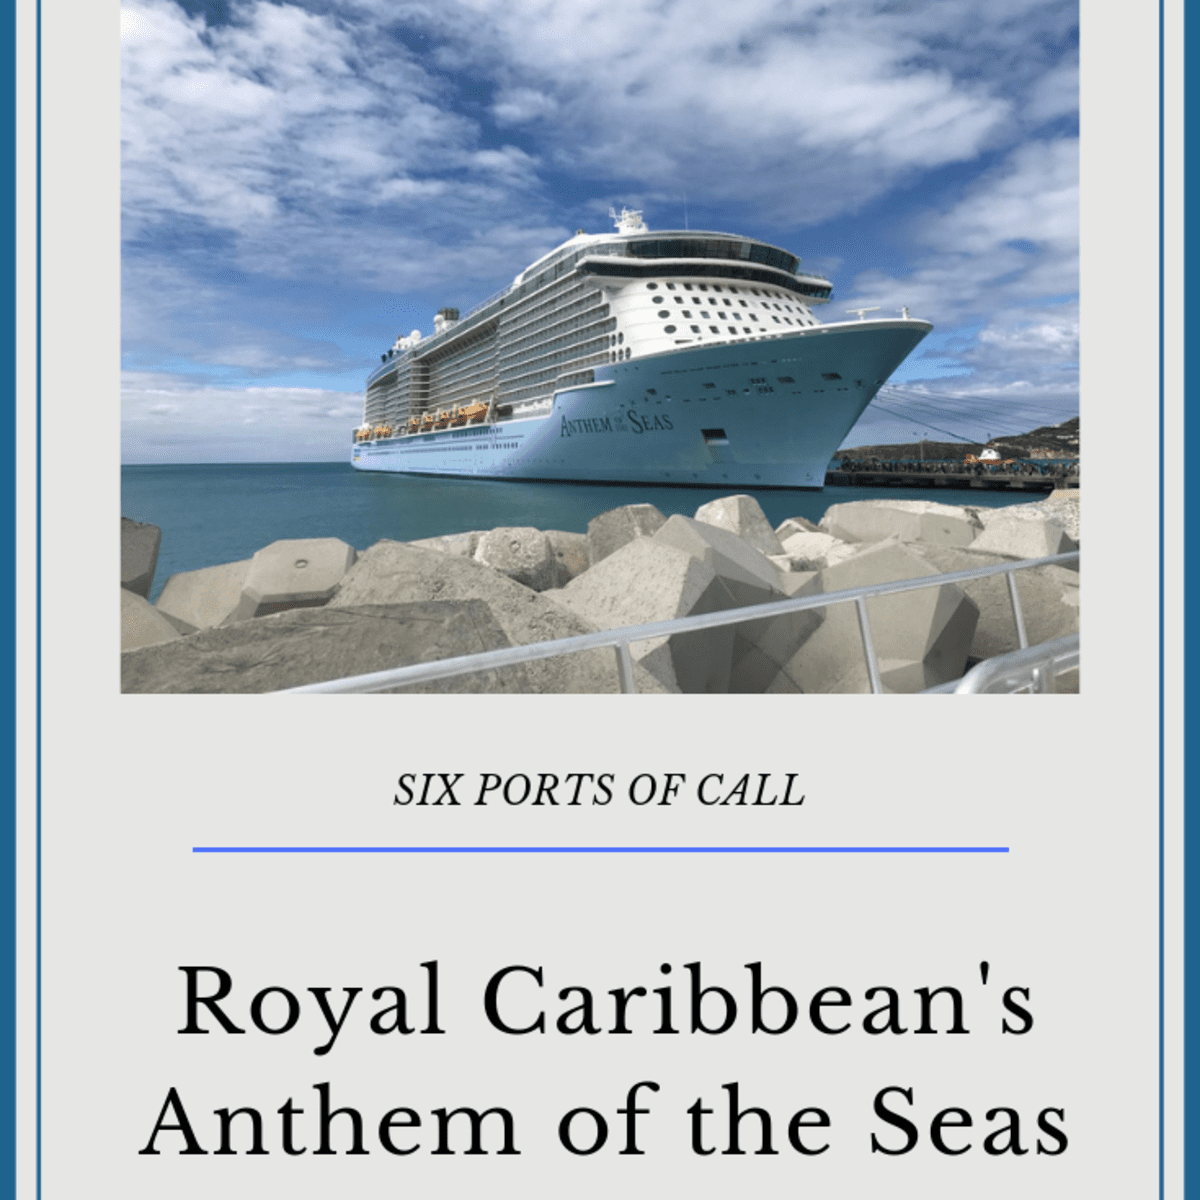 Anthem of the Seas Cruise Ship